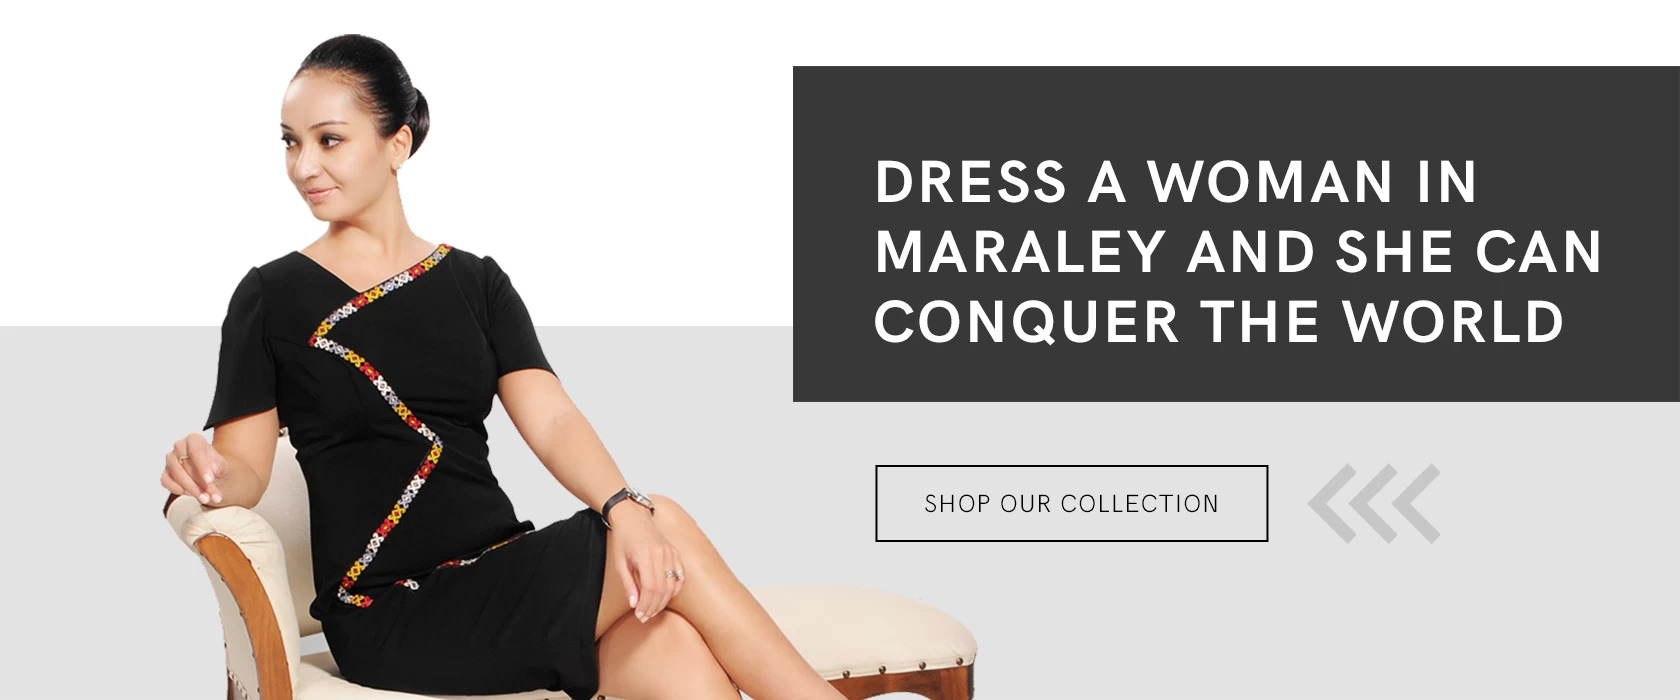 Maraley_Website_Revised5-1680x700